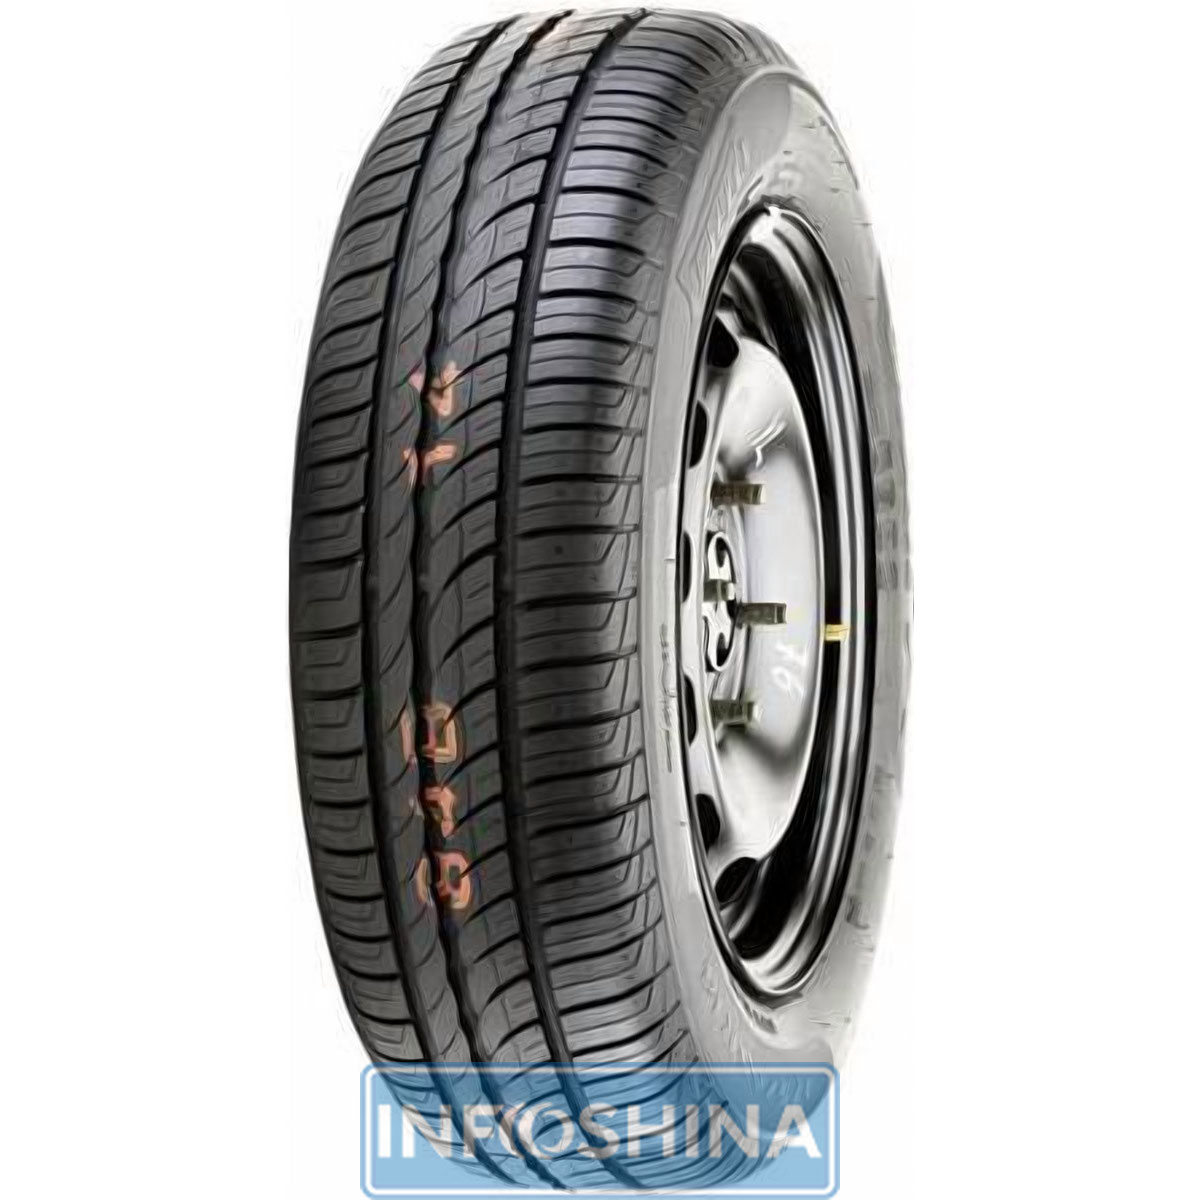 Купить шины Pirelli Cinturato P1 195/55 R16 87W Run Flat